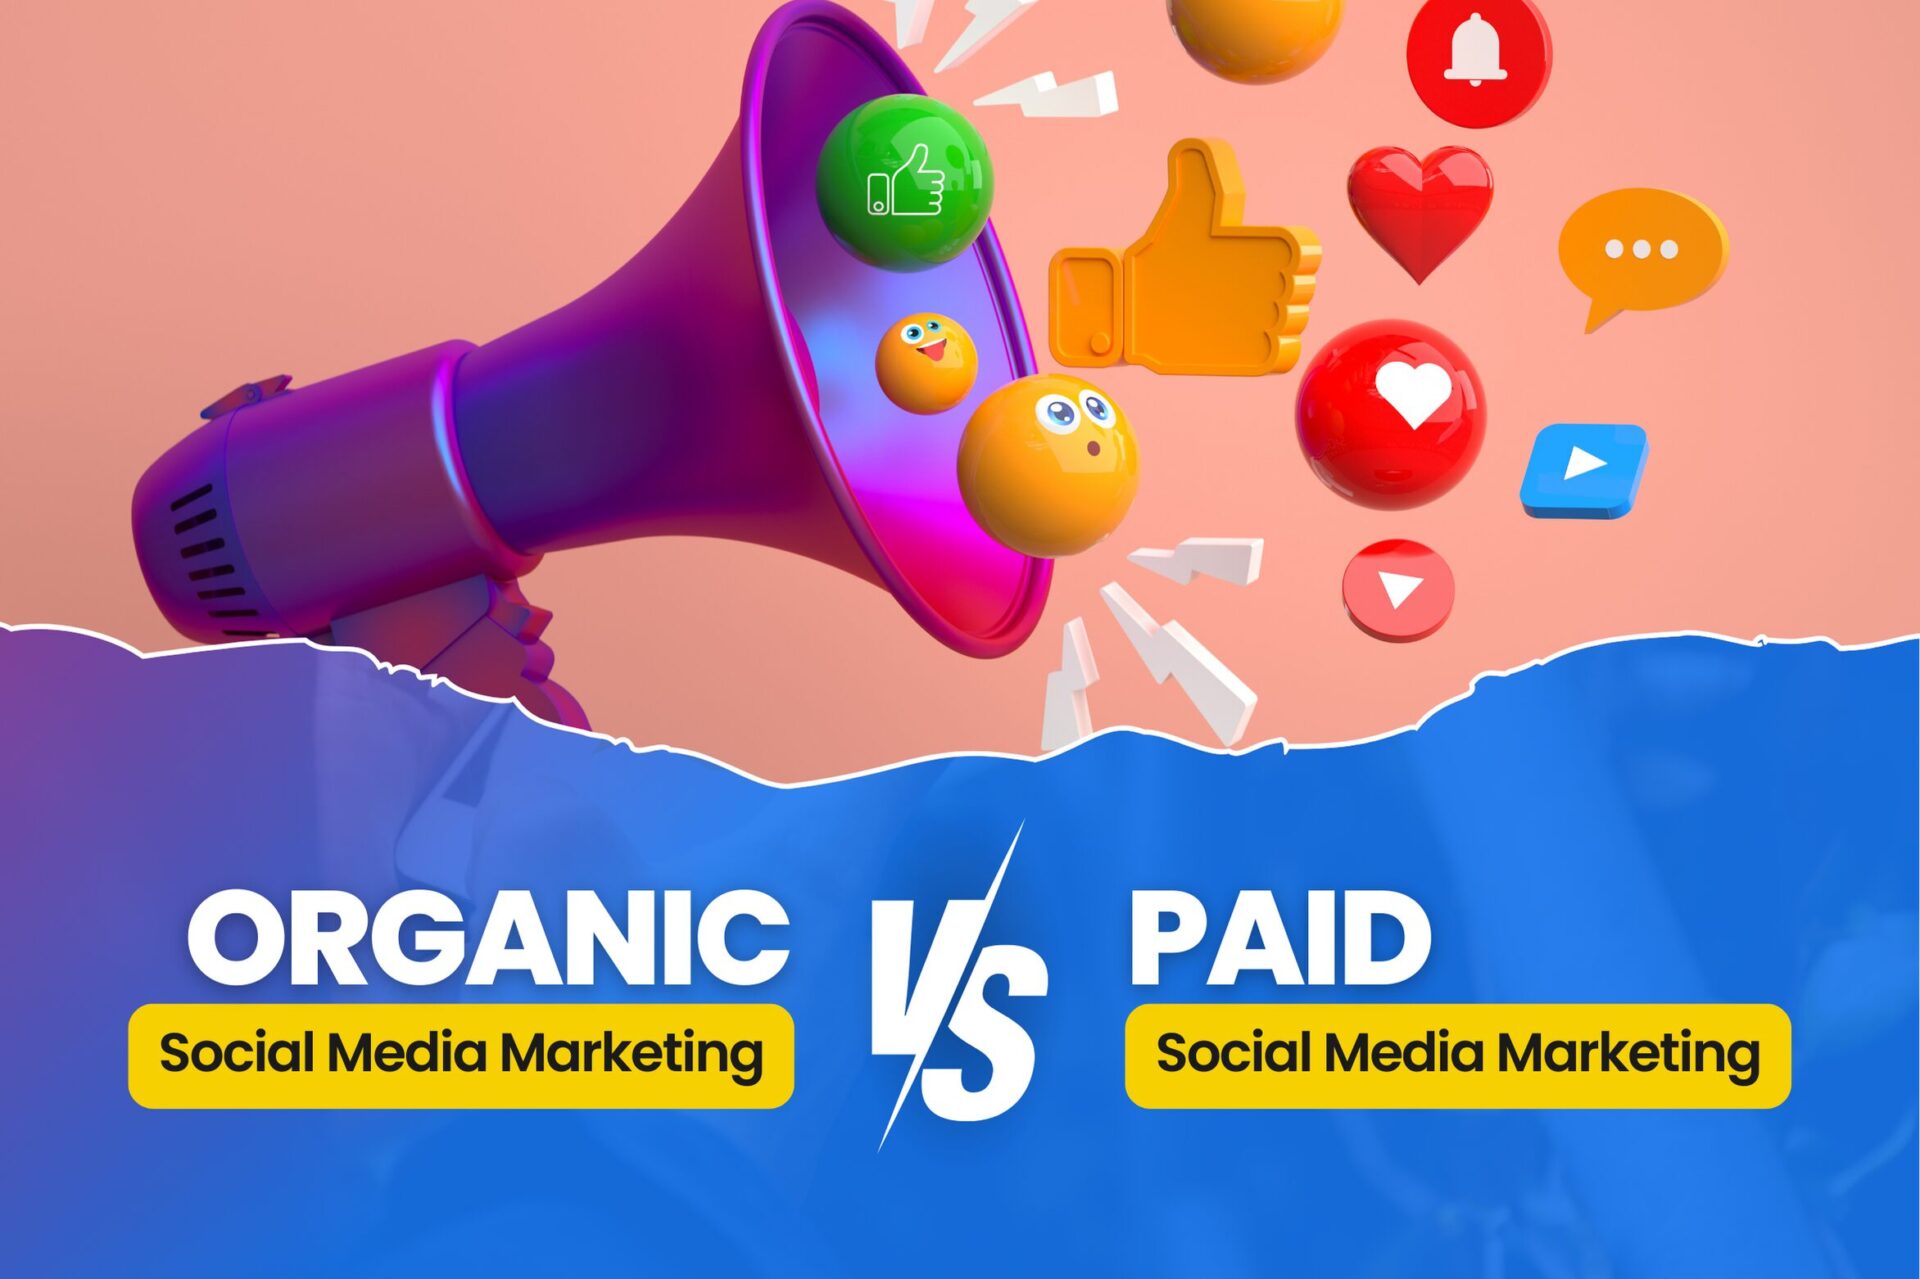 Organic Social Media Marketing